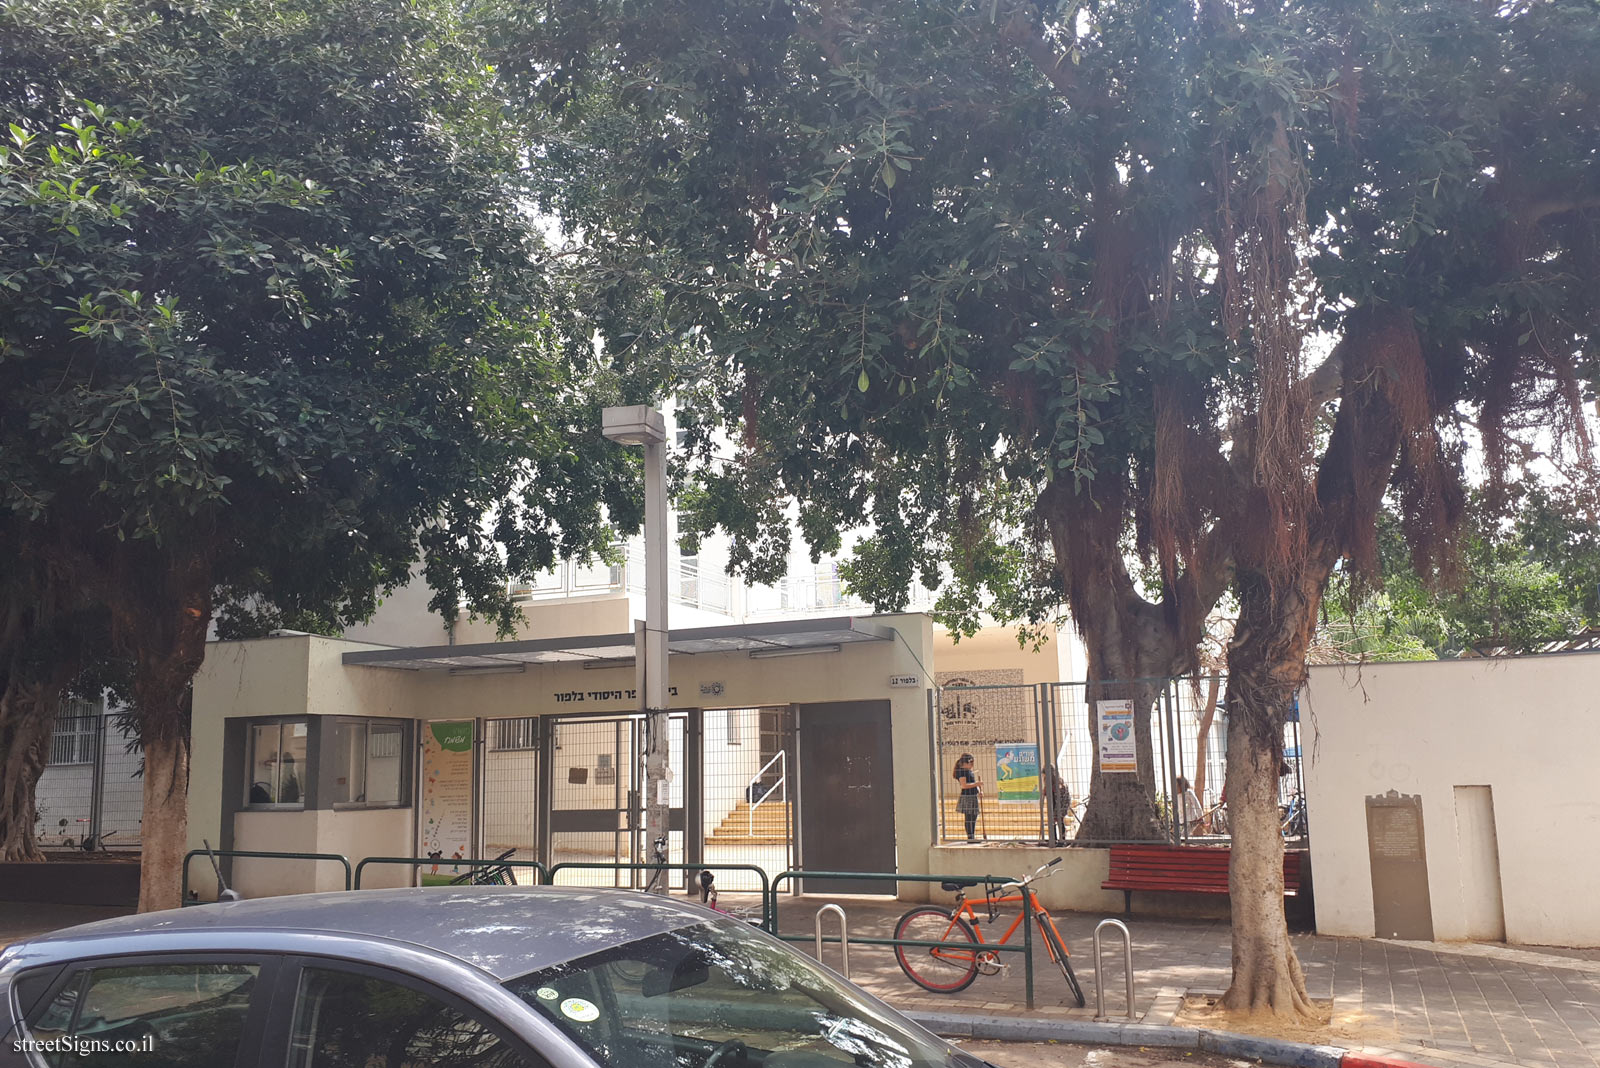 Training Center 3 - Balfour school - Balfour St 12, Tel Aviv-Yafo, Israel